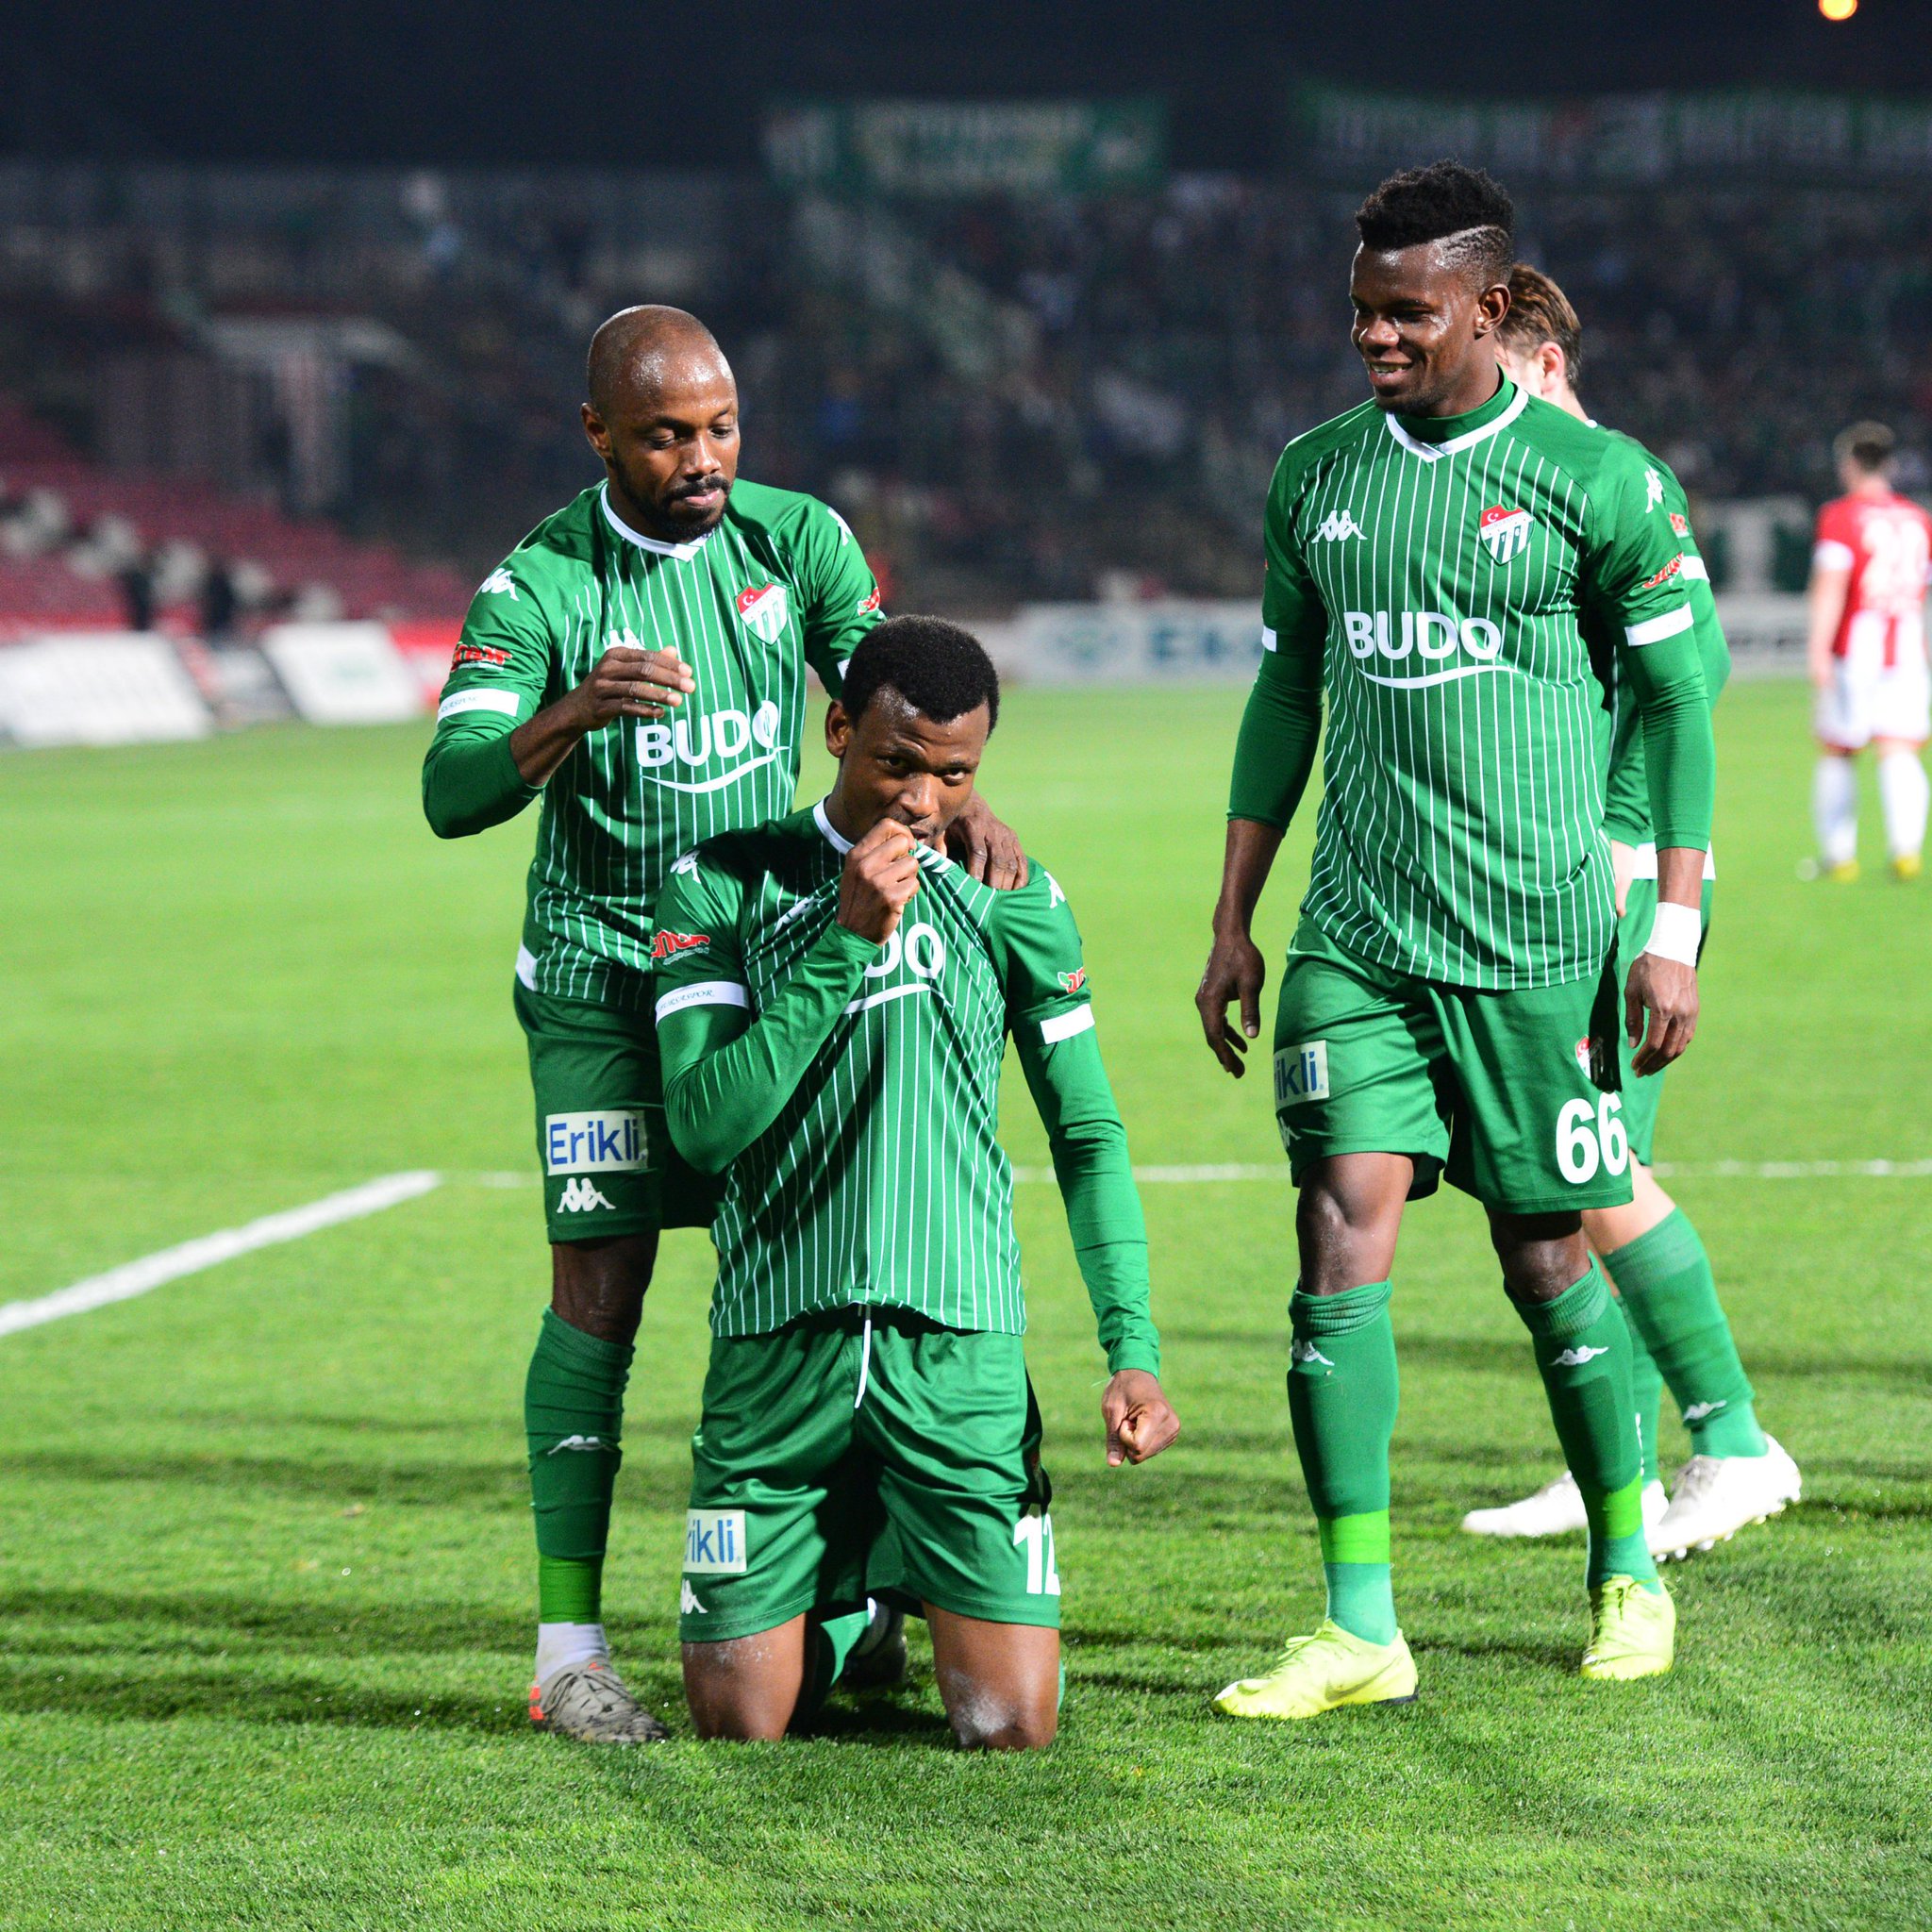 Abdullahi  Dedicates Goal In Away Win Vs Balikesirspor To Bursaspor Fans